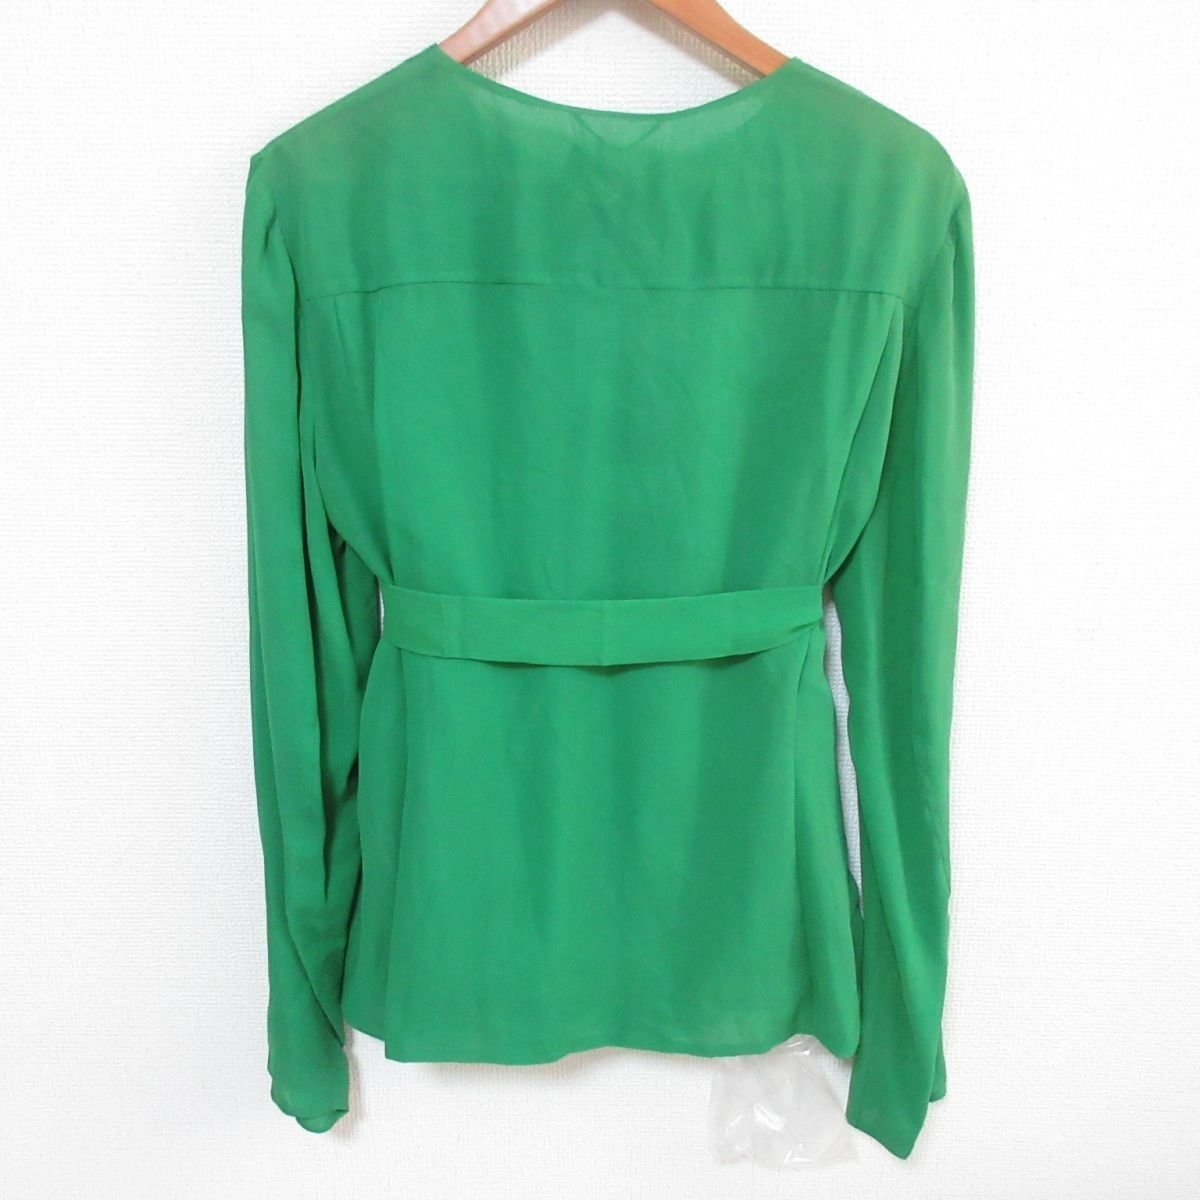  unused Les Copainsreko bread silk 100% pocket design sia- bell tedo jacket large size 44 green *